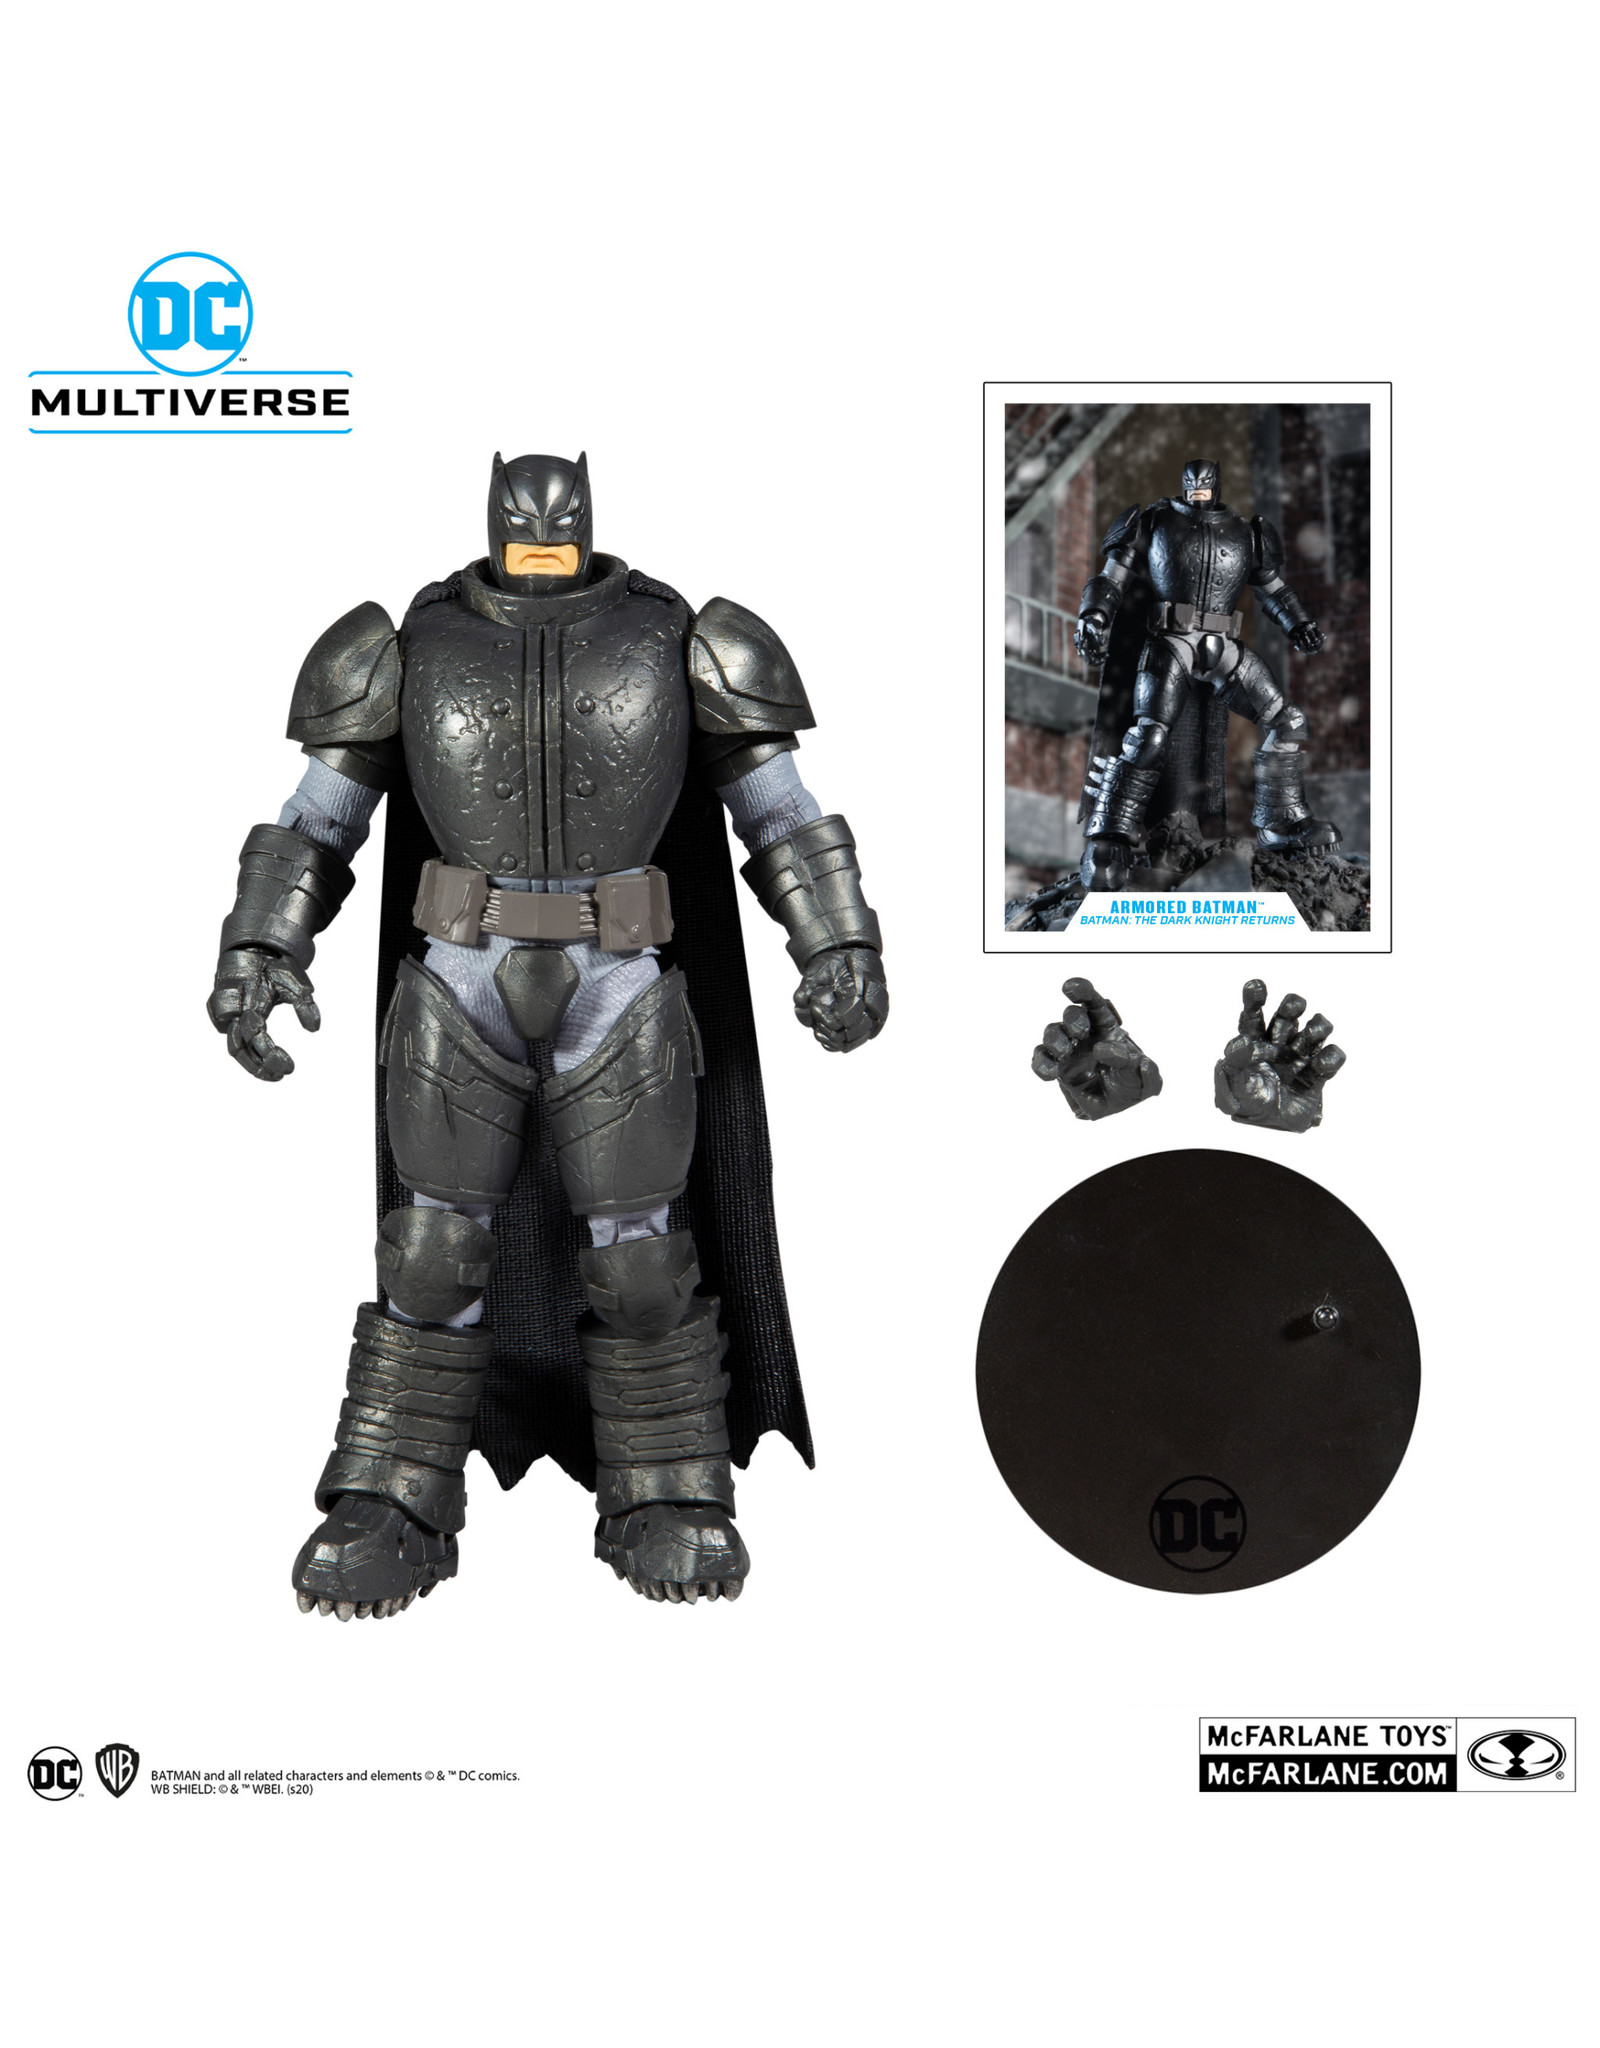 McFarlane toys DC multiverse - Armored Batman